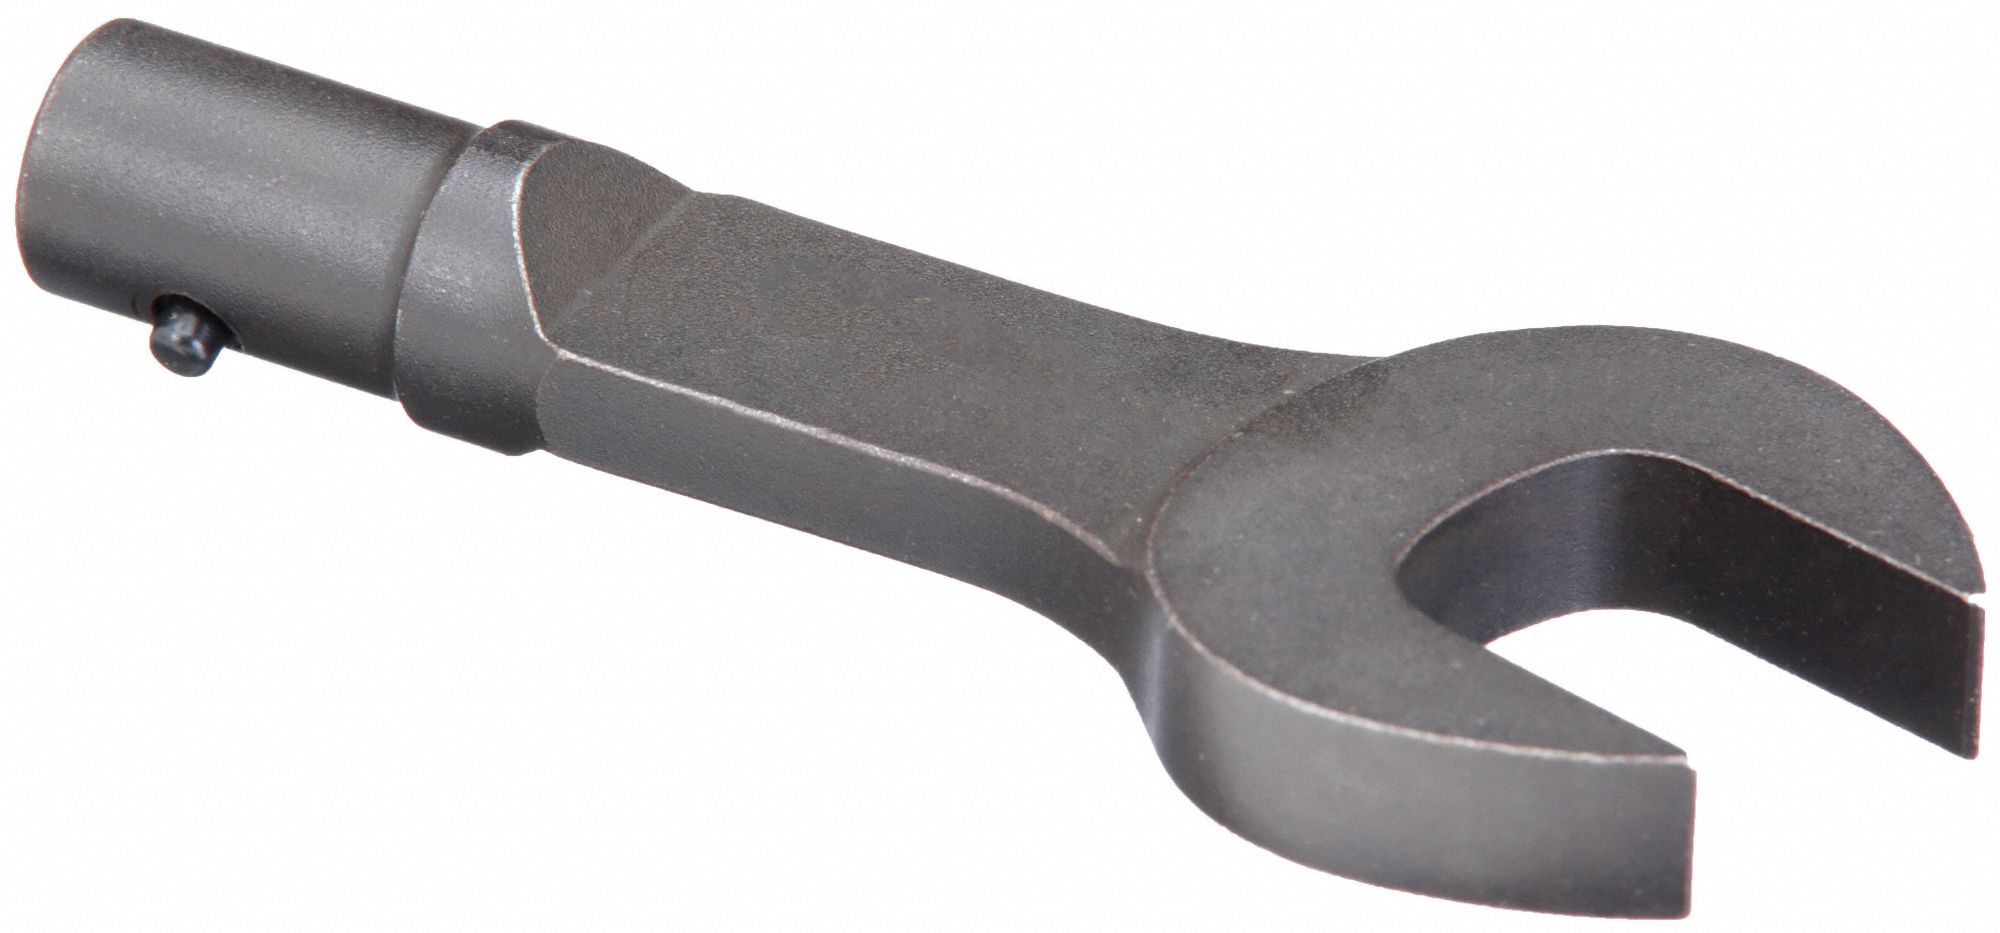 1-1/2" V-Bottom Open Interchangeable Torque Wrench Head Details about   SAME AS  Belknap RXE-24 